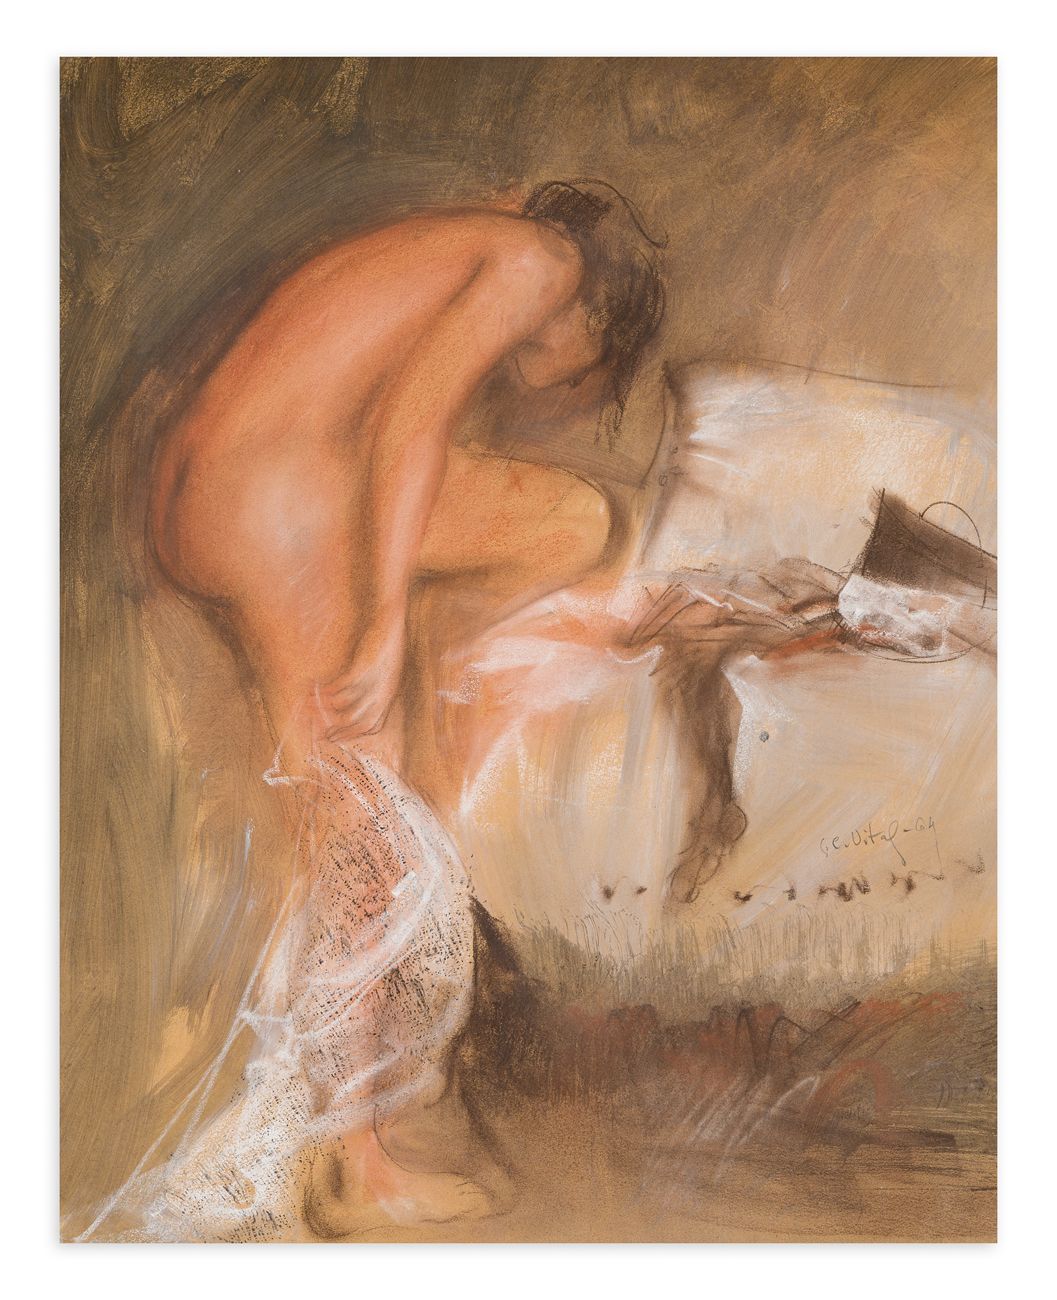 GIANCARLO VITALI (1929-2018) - Nudo, 1964 纸上粉笔画

68x56厘米

签名在前面

保护板背面有展览标签 "一个世&hellip;